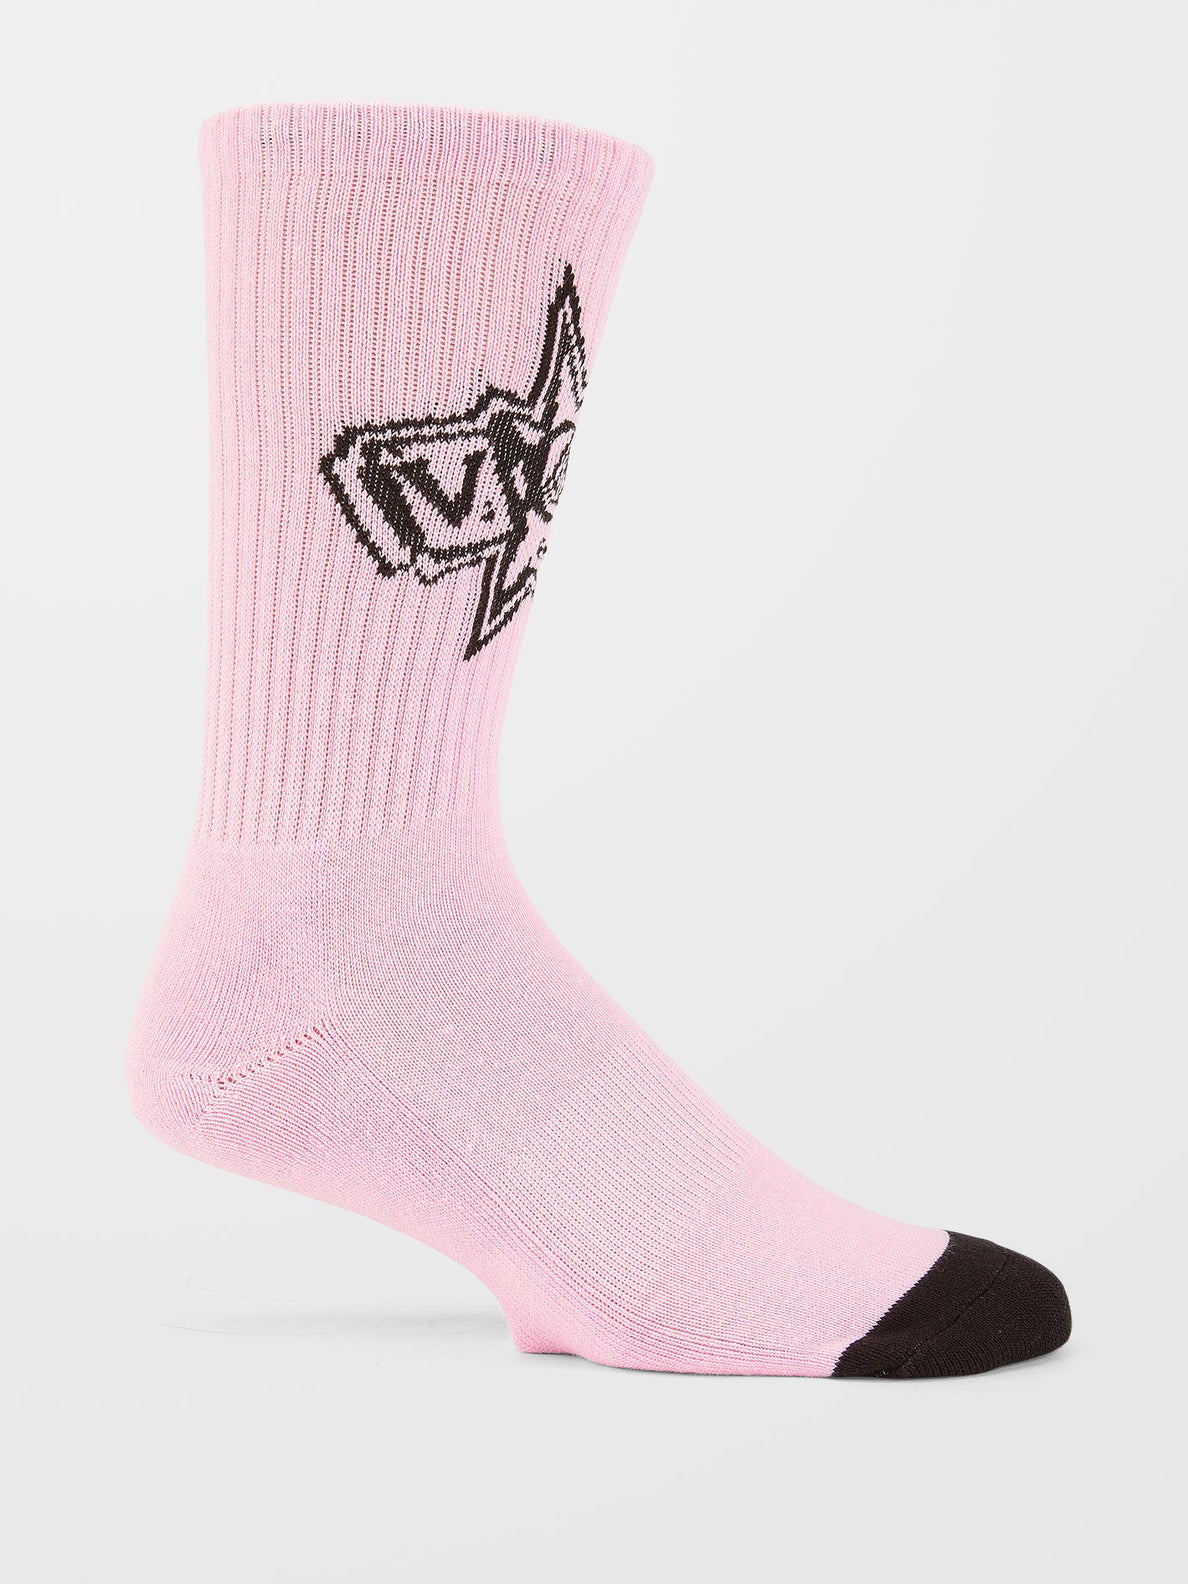 Volcom V Ent Socke Premium Reef Pink